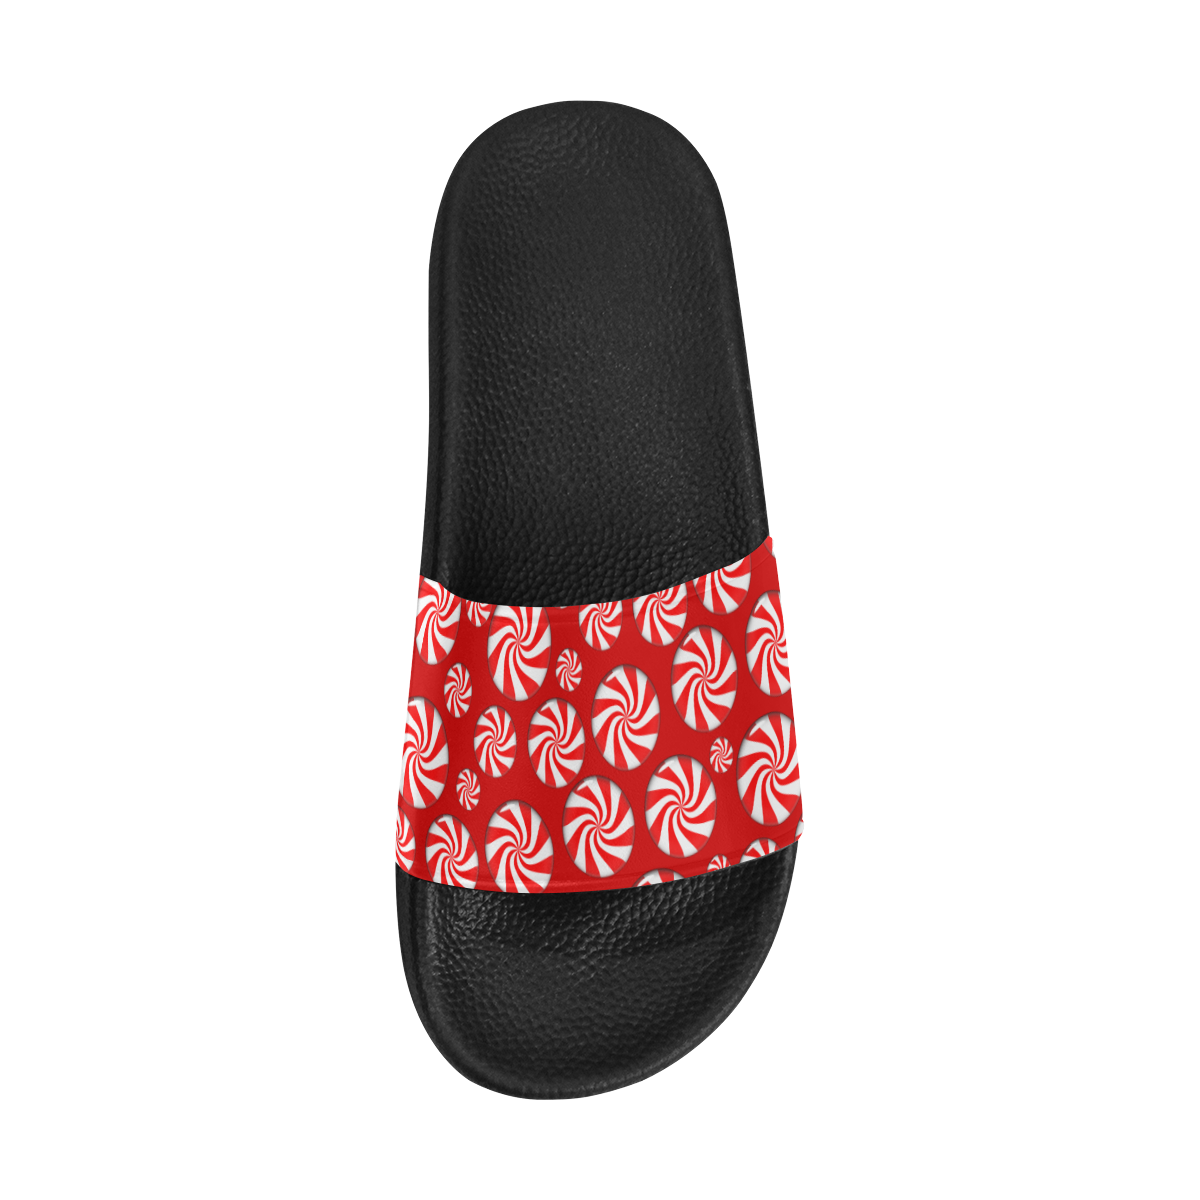 Christmas Peppermint Candy on Red Men's Slide Sandals (Model 057)